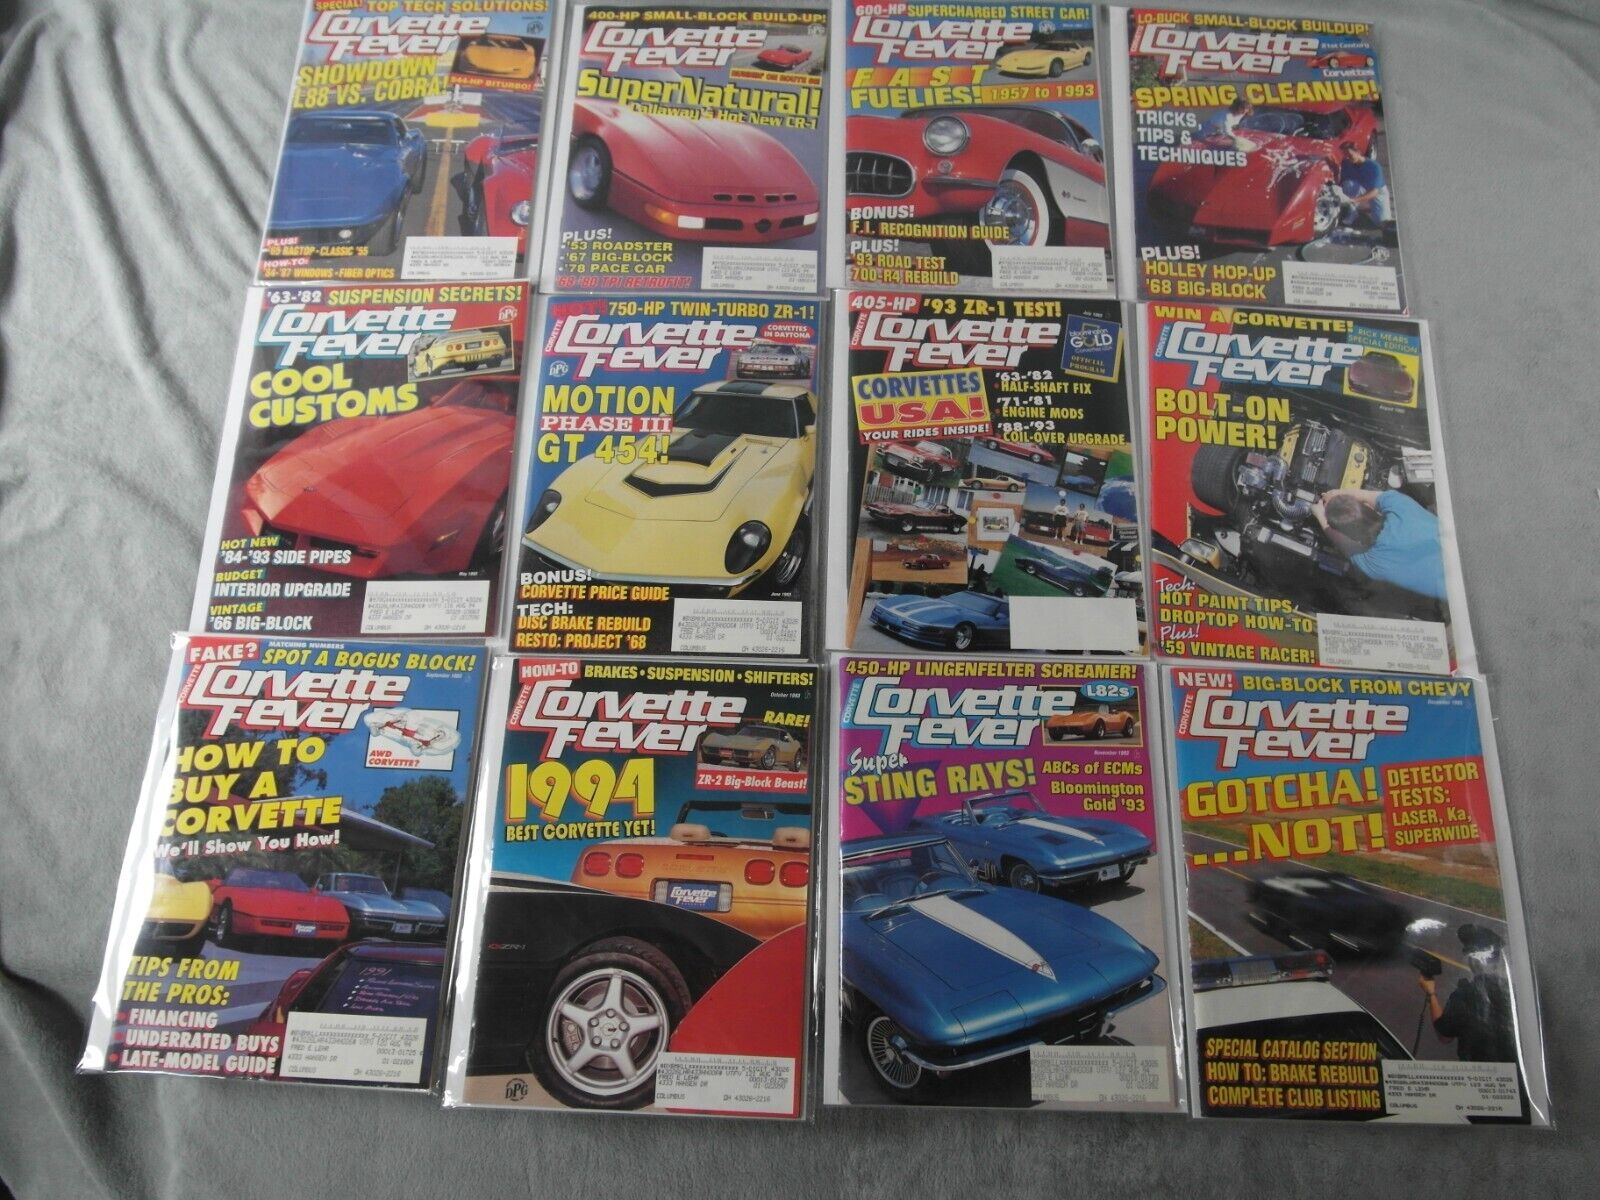 Corvette Fever Magazine 1993 - The Complete Year 12 Full Issues. NICE